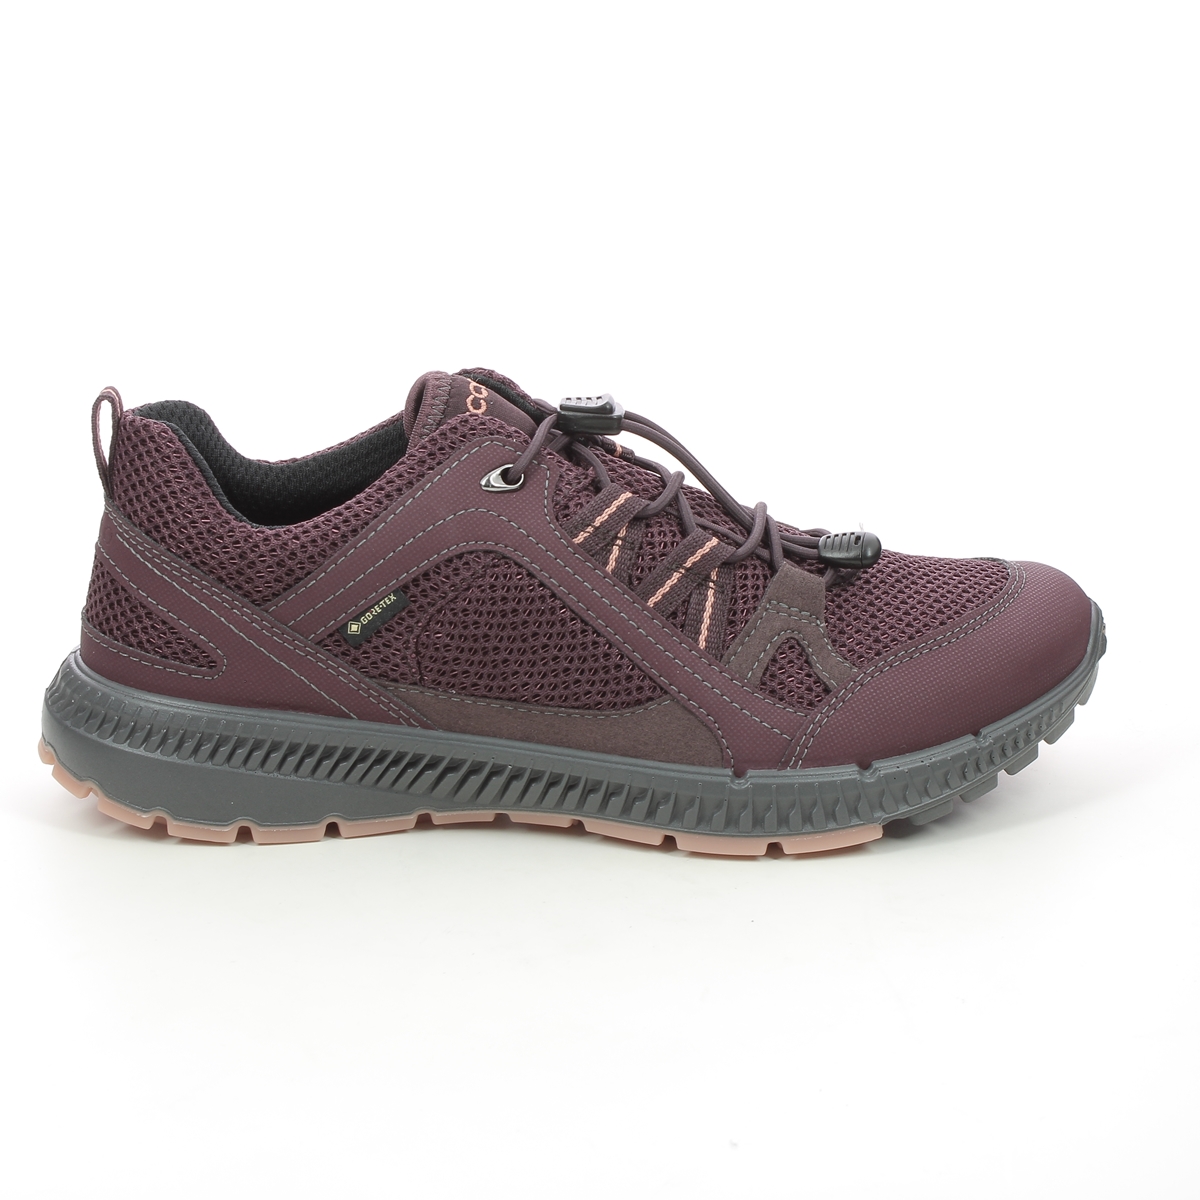 Terracruise Gtx 843063-51502 Walking Shoes